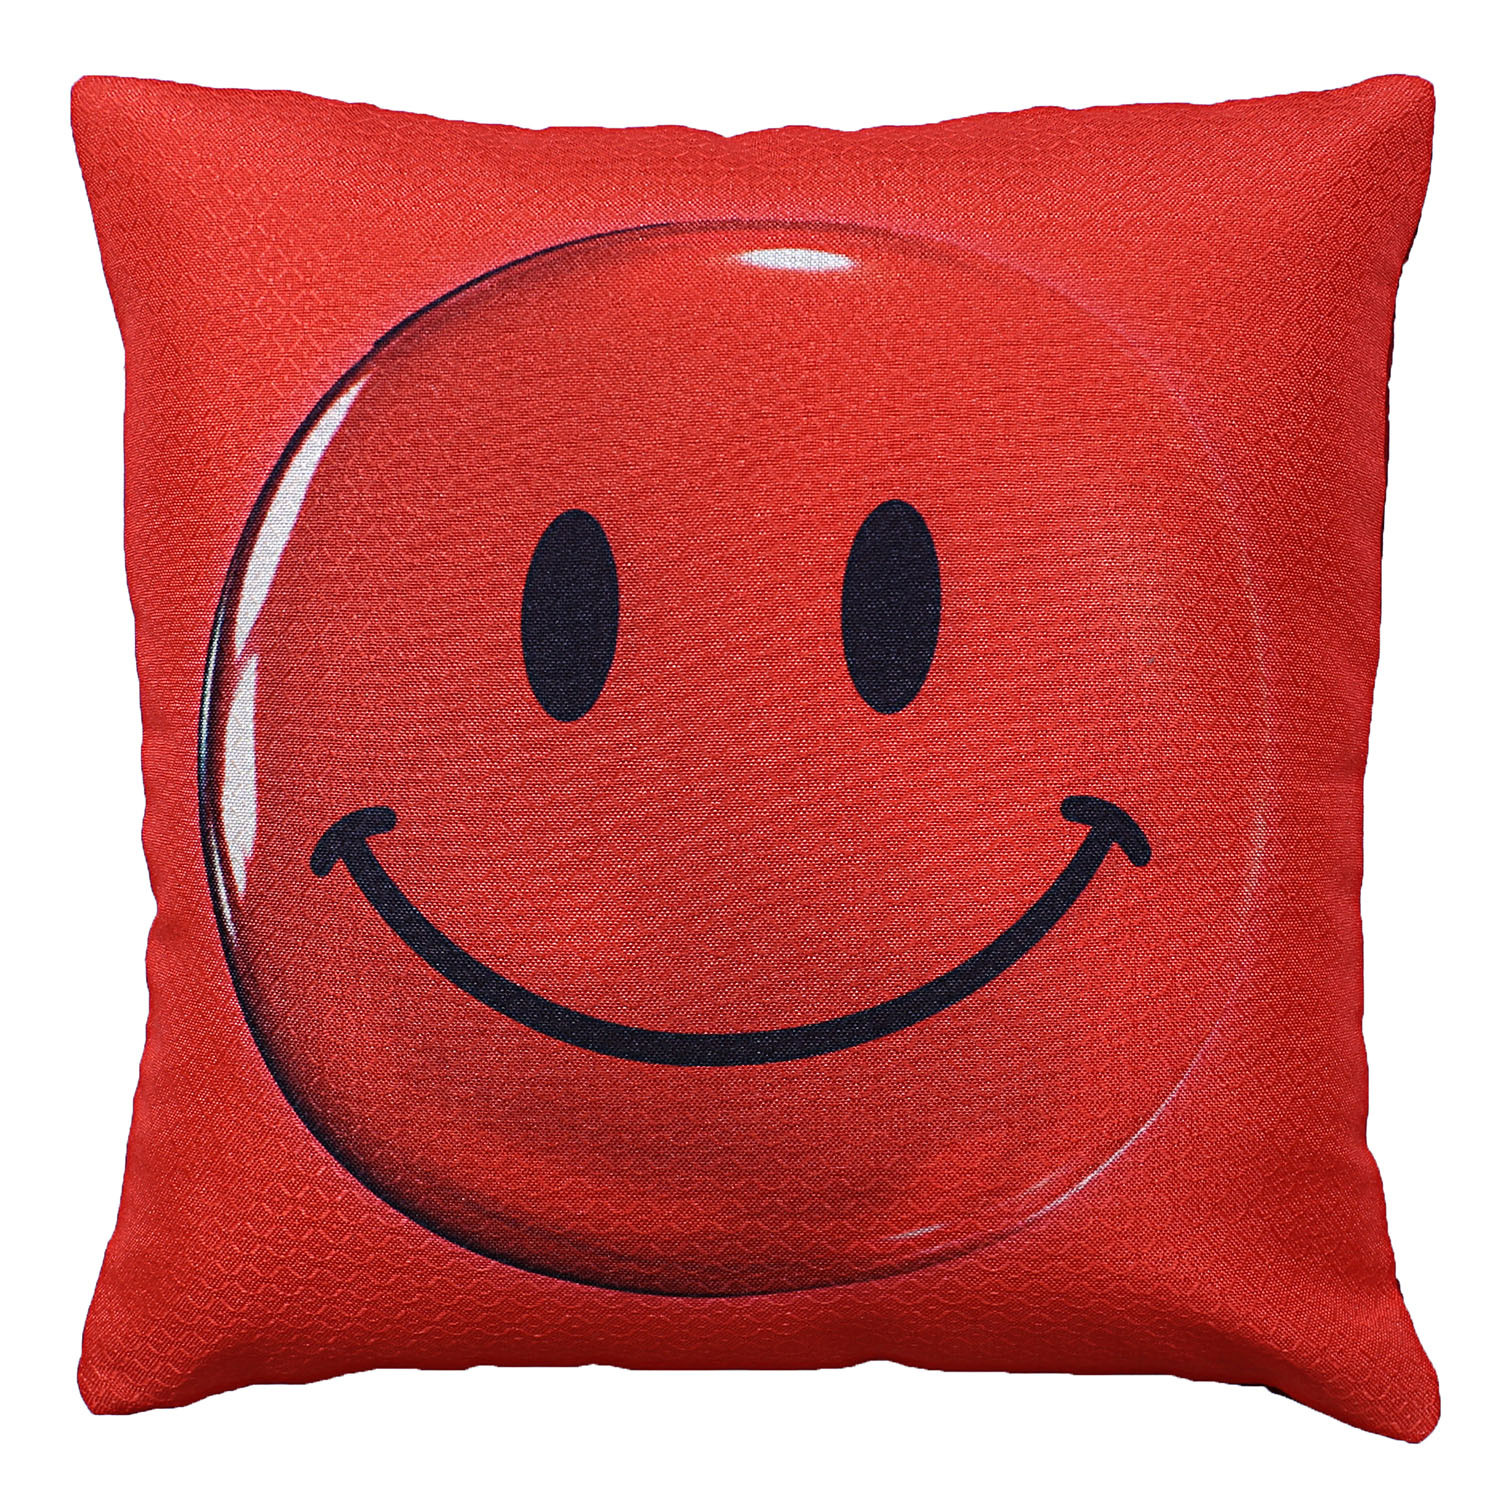 Kuber Industries Smile Ball Print Cushion Cover|Ractangle Cushion Covers|Sofa Cushion Covers|Cushion Covers 16 inch x 16 inch|Cushion Cover Set of 5 (Red)